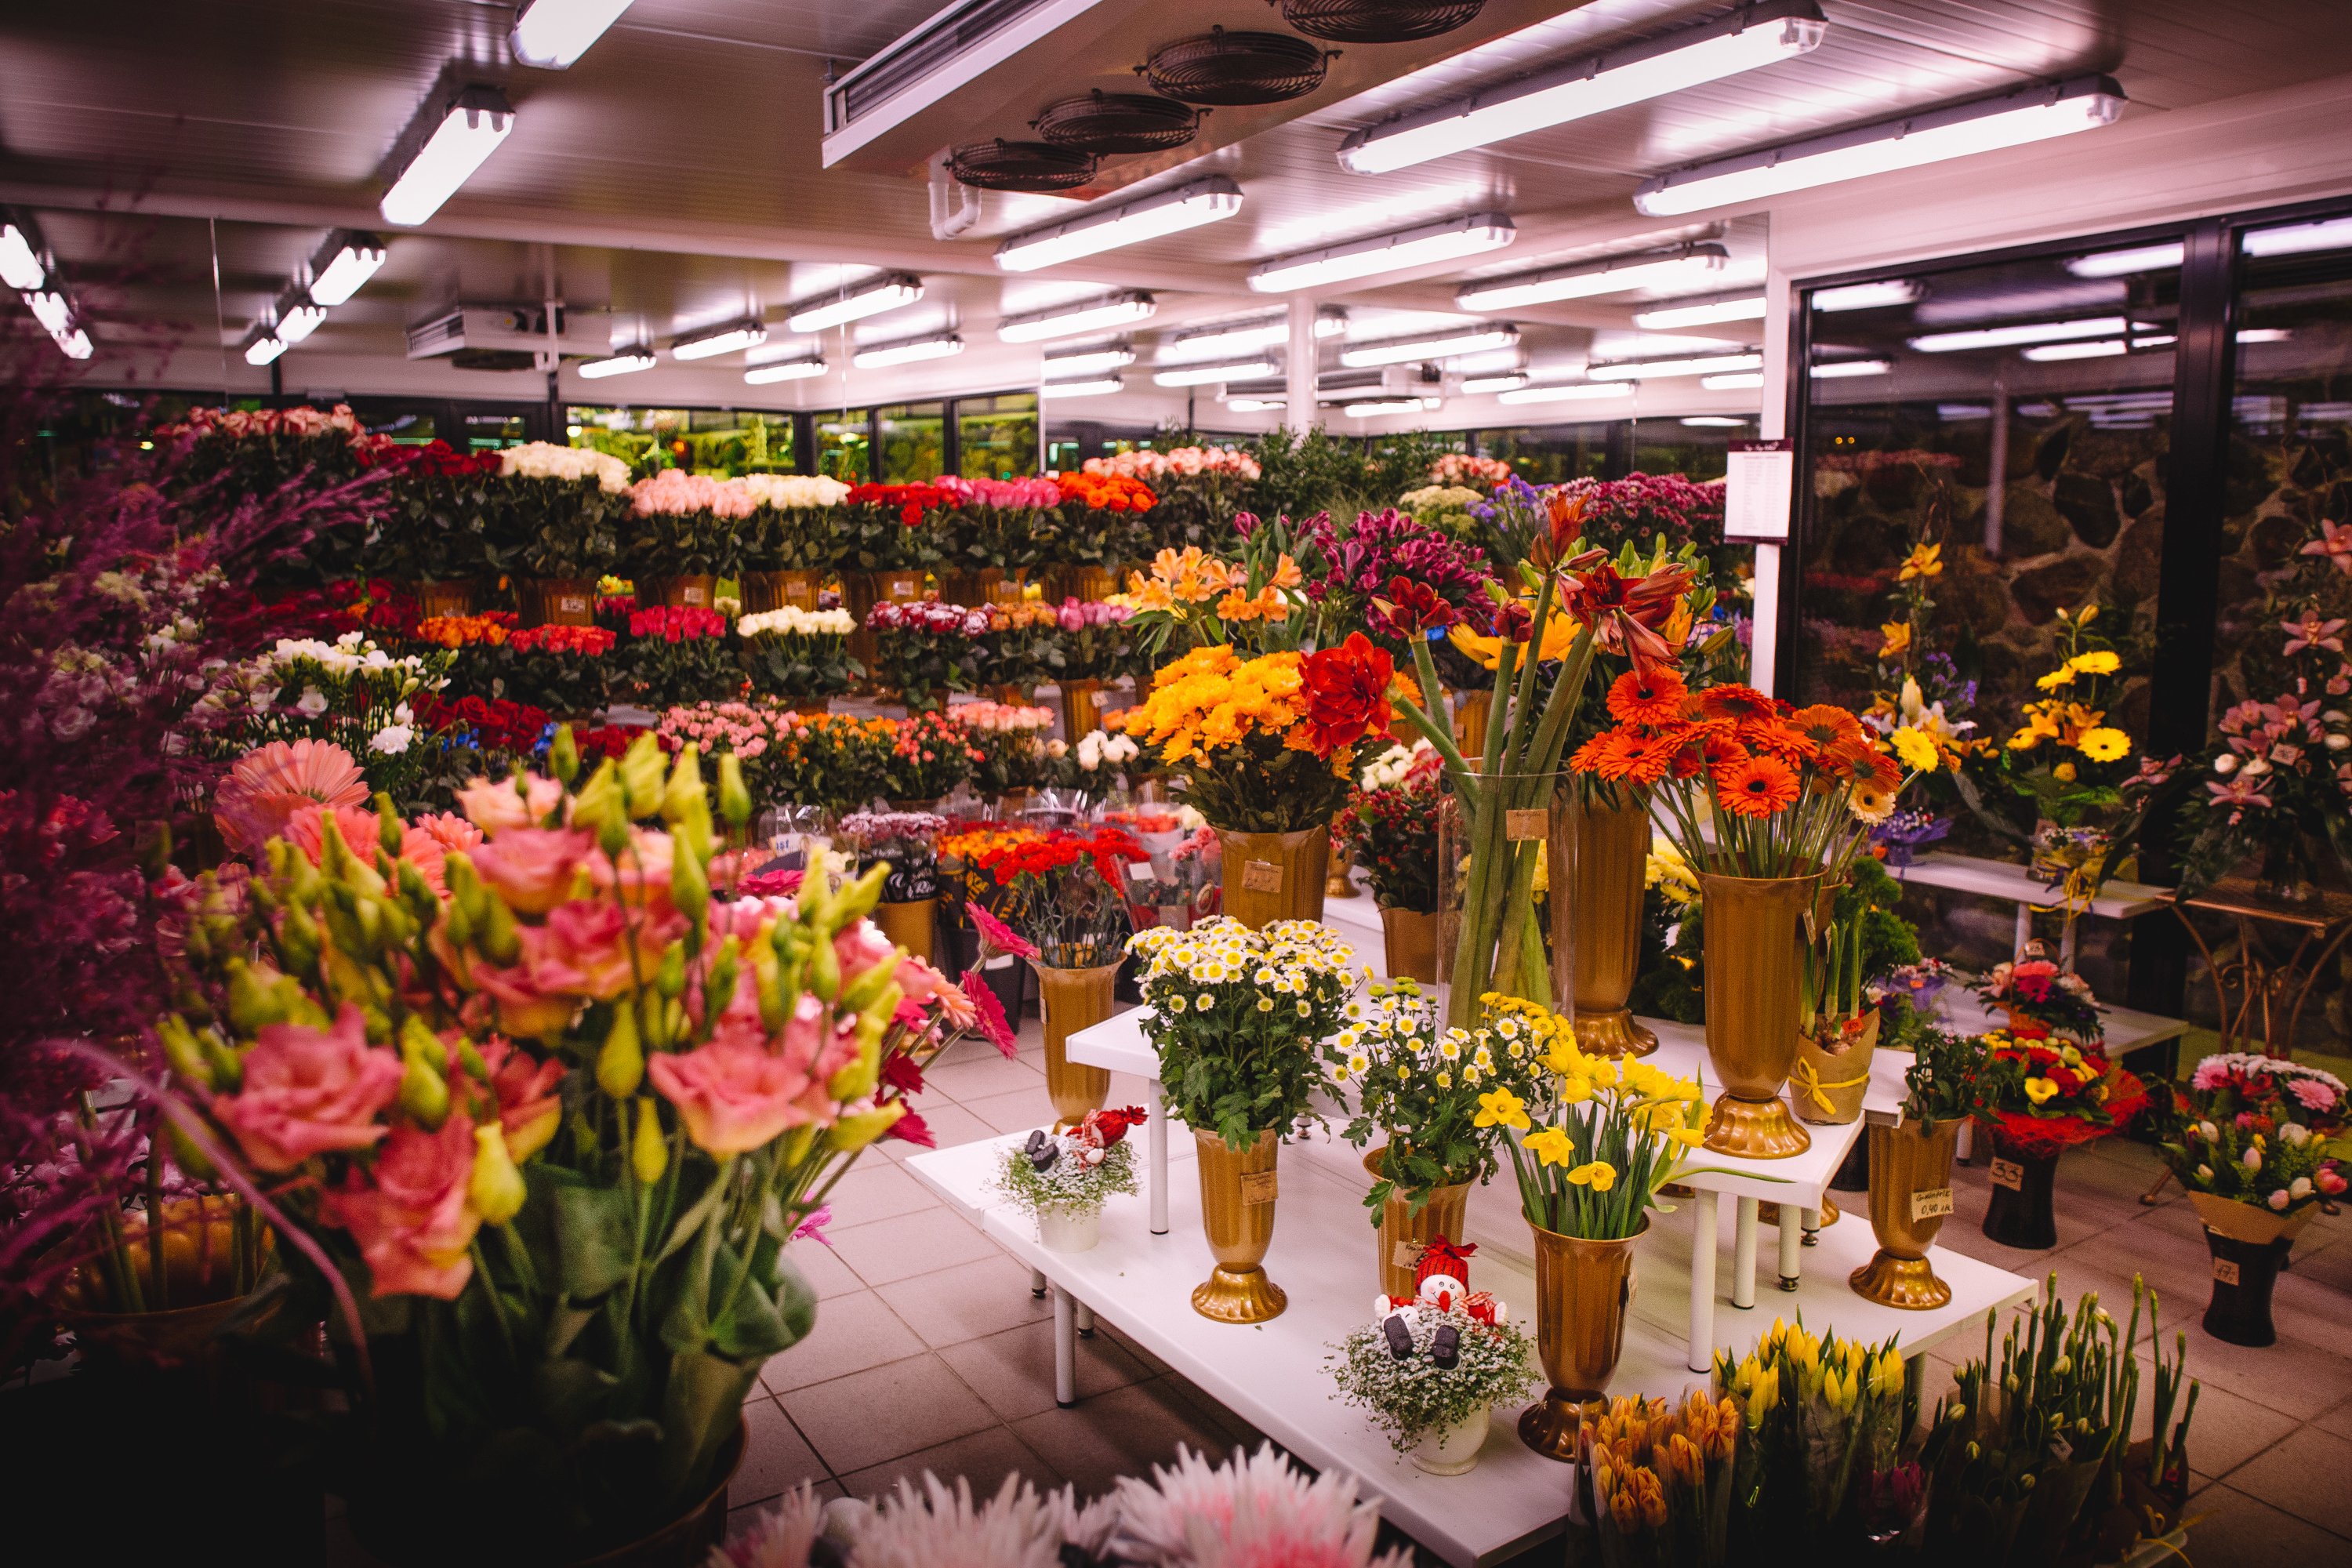 Huge beautiful flowershop and wide assortment of flowers. | Source: Shutterstock